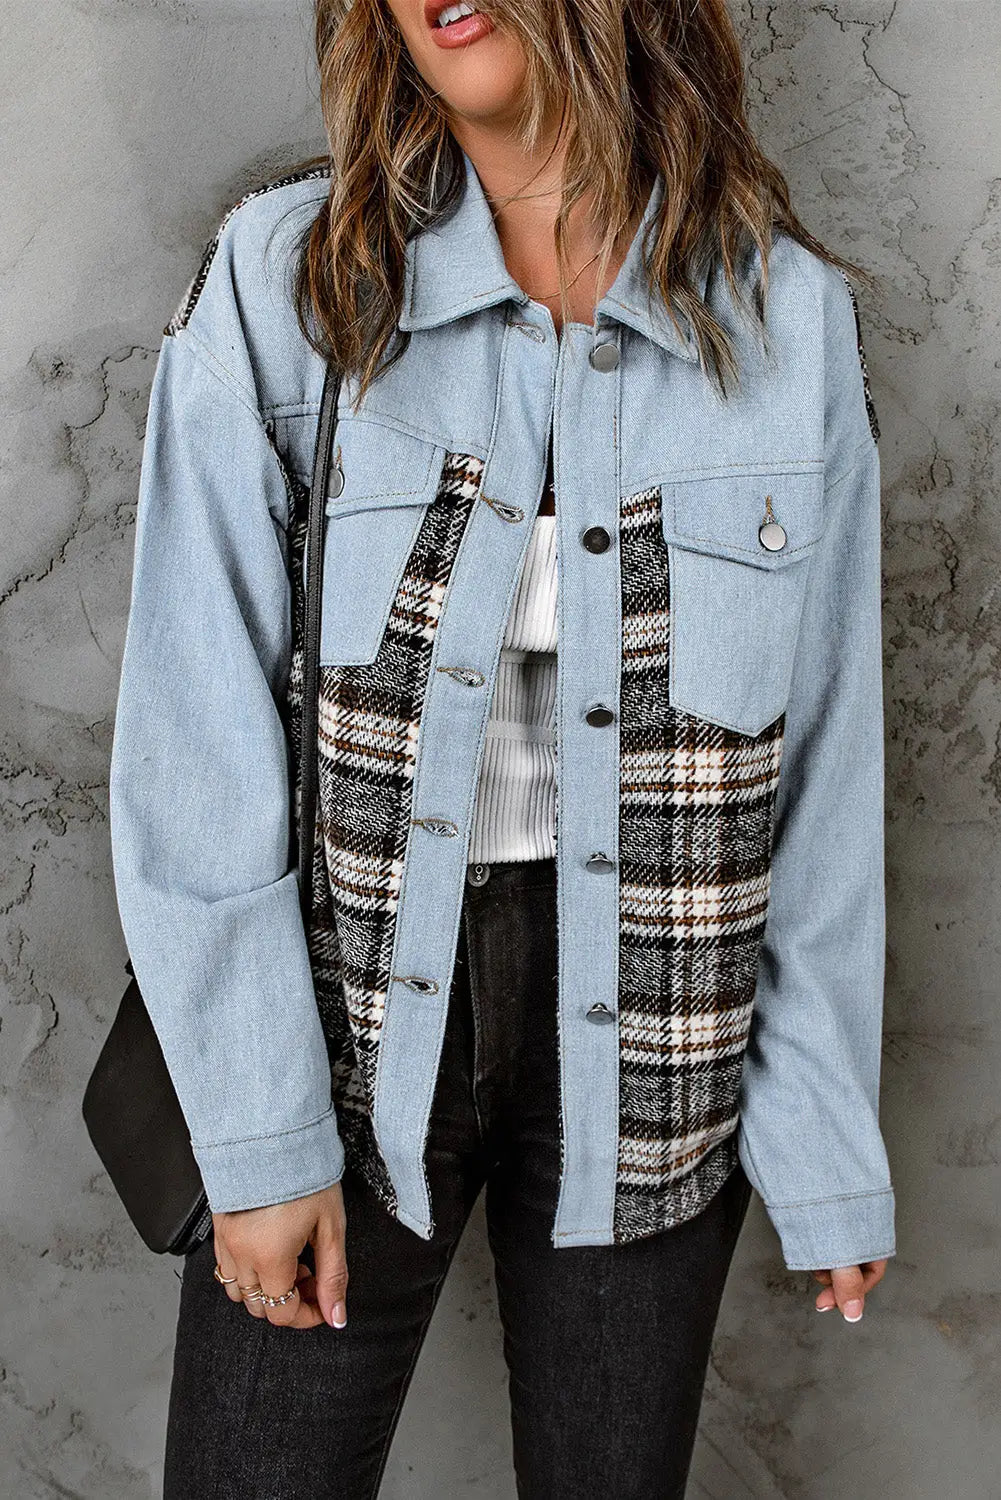 Sky blue plaid patchwork raw hem denim jacket - s / 75% cotton + 25% polyester - outerwear